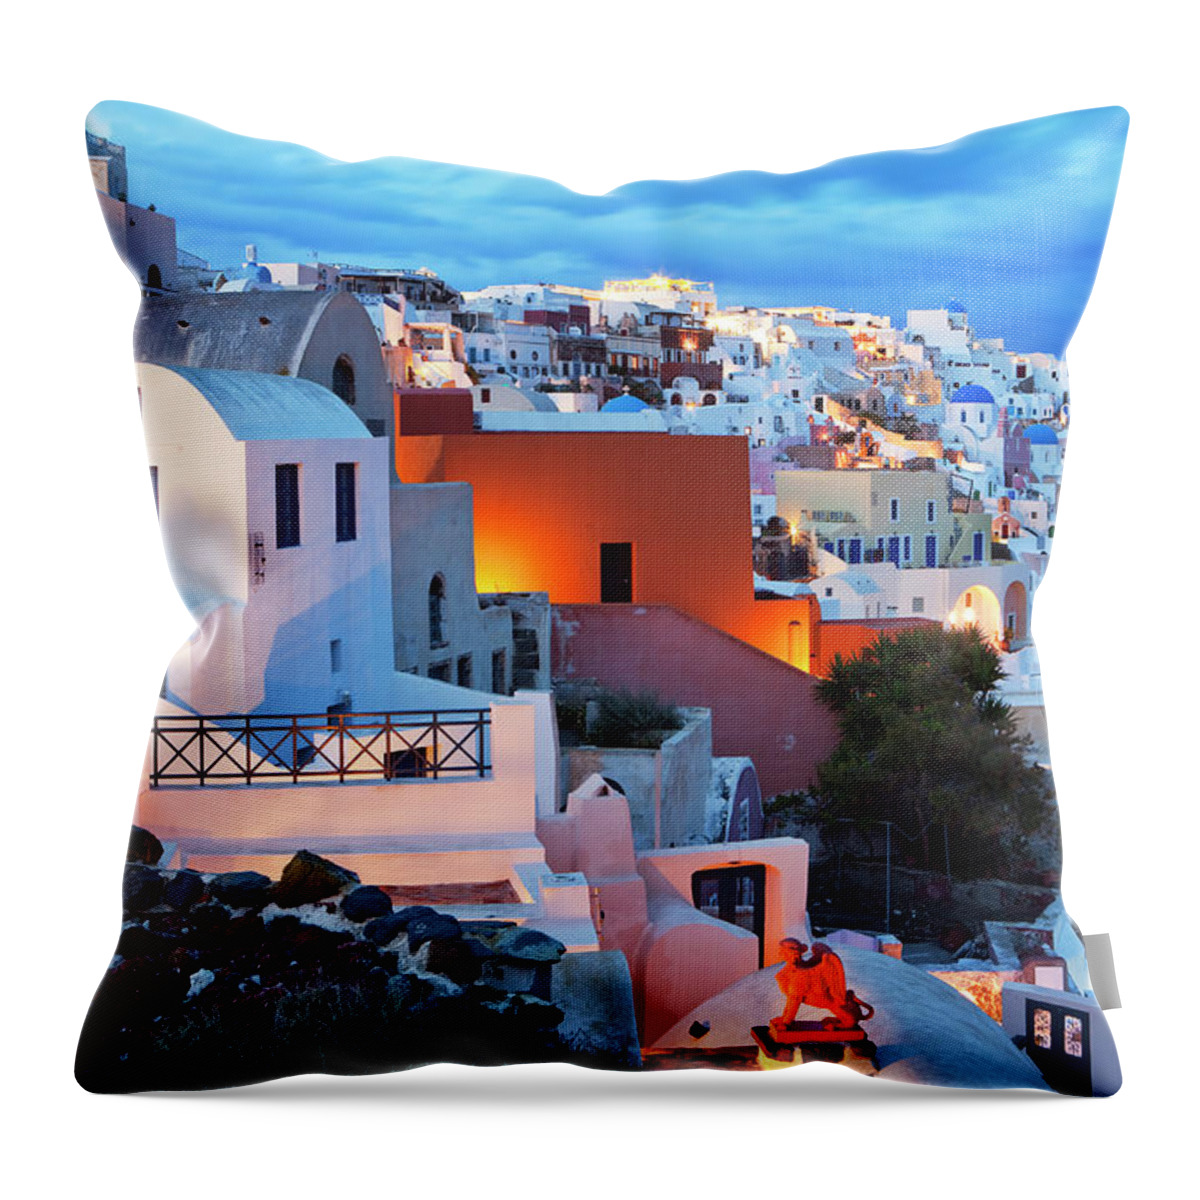 Estock Throw Pillow featuring the digital art Oia Village, Santorini, Greece #7 by Luigi Vaccarella